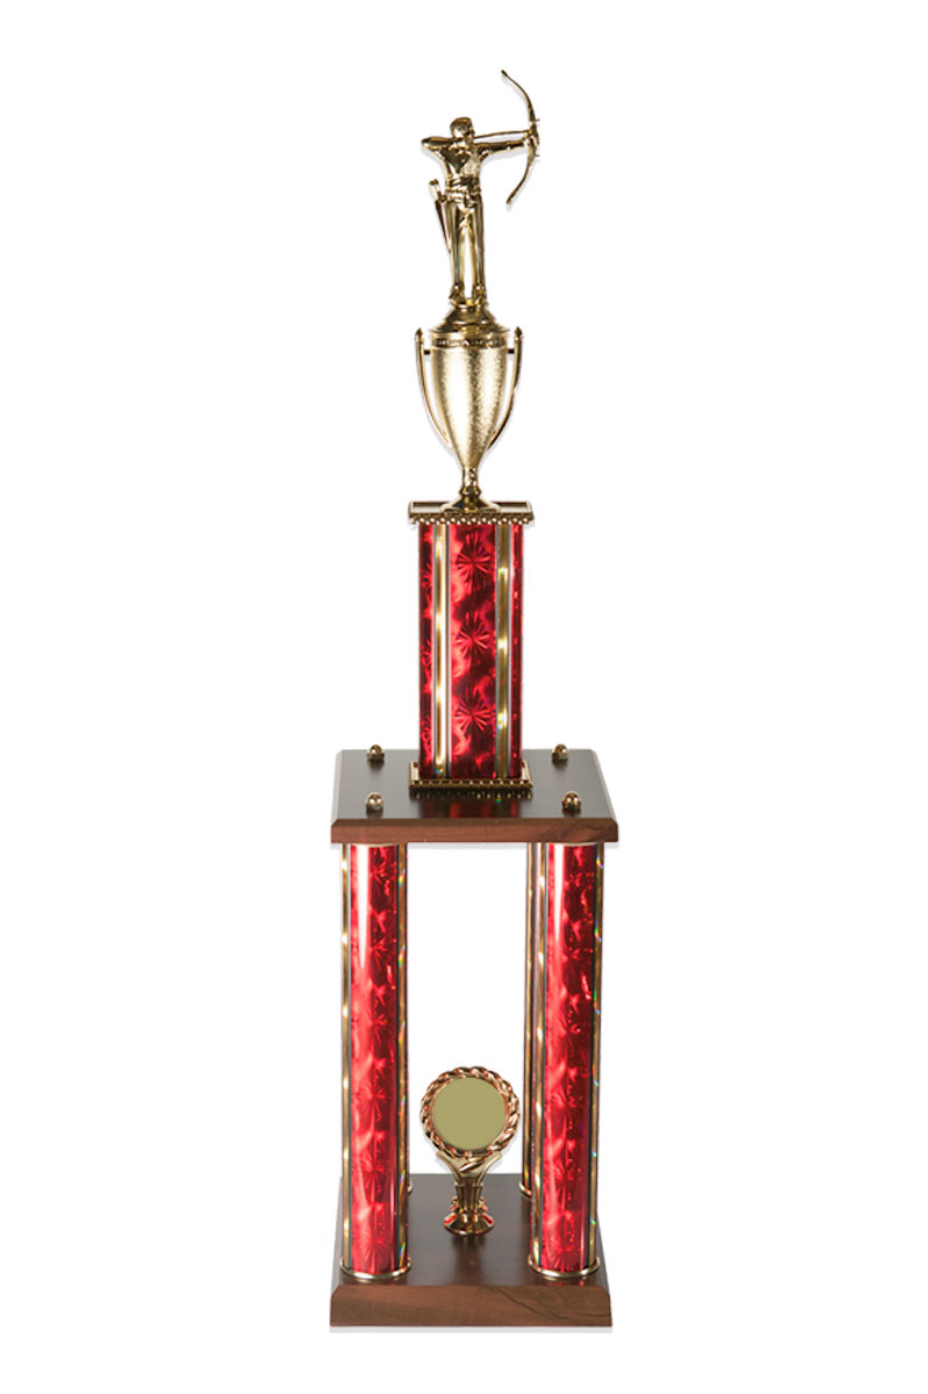 NASP® 4 Post Trophy